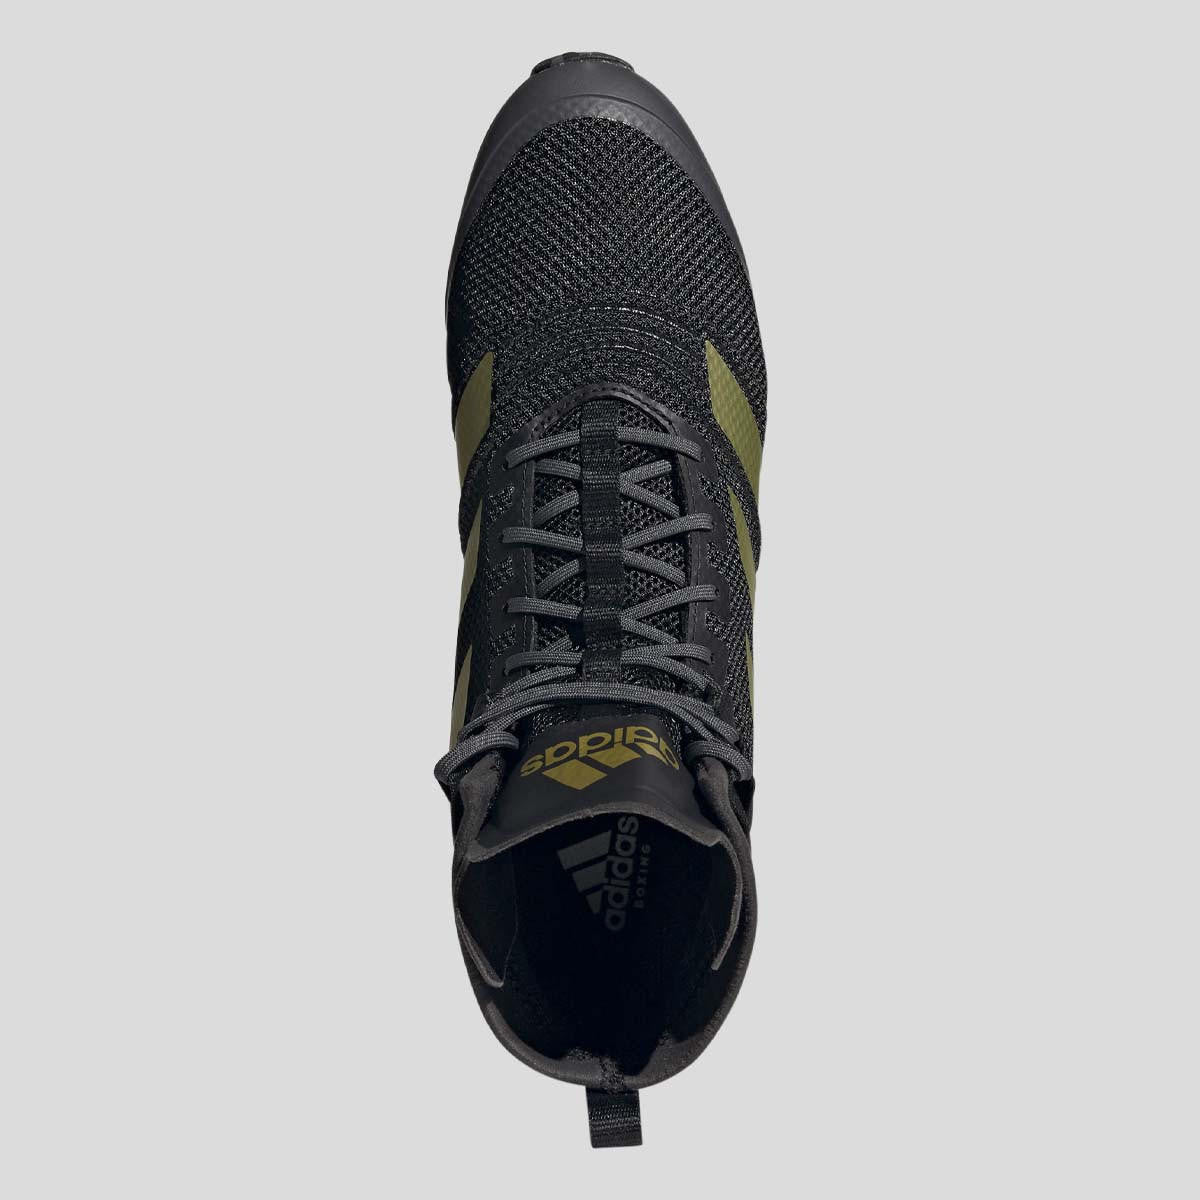 Black/Gold Adidas Speedex 18 Boxing Boots 2022